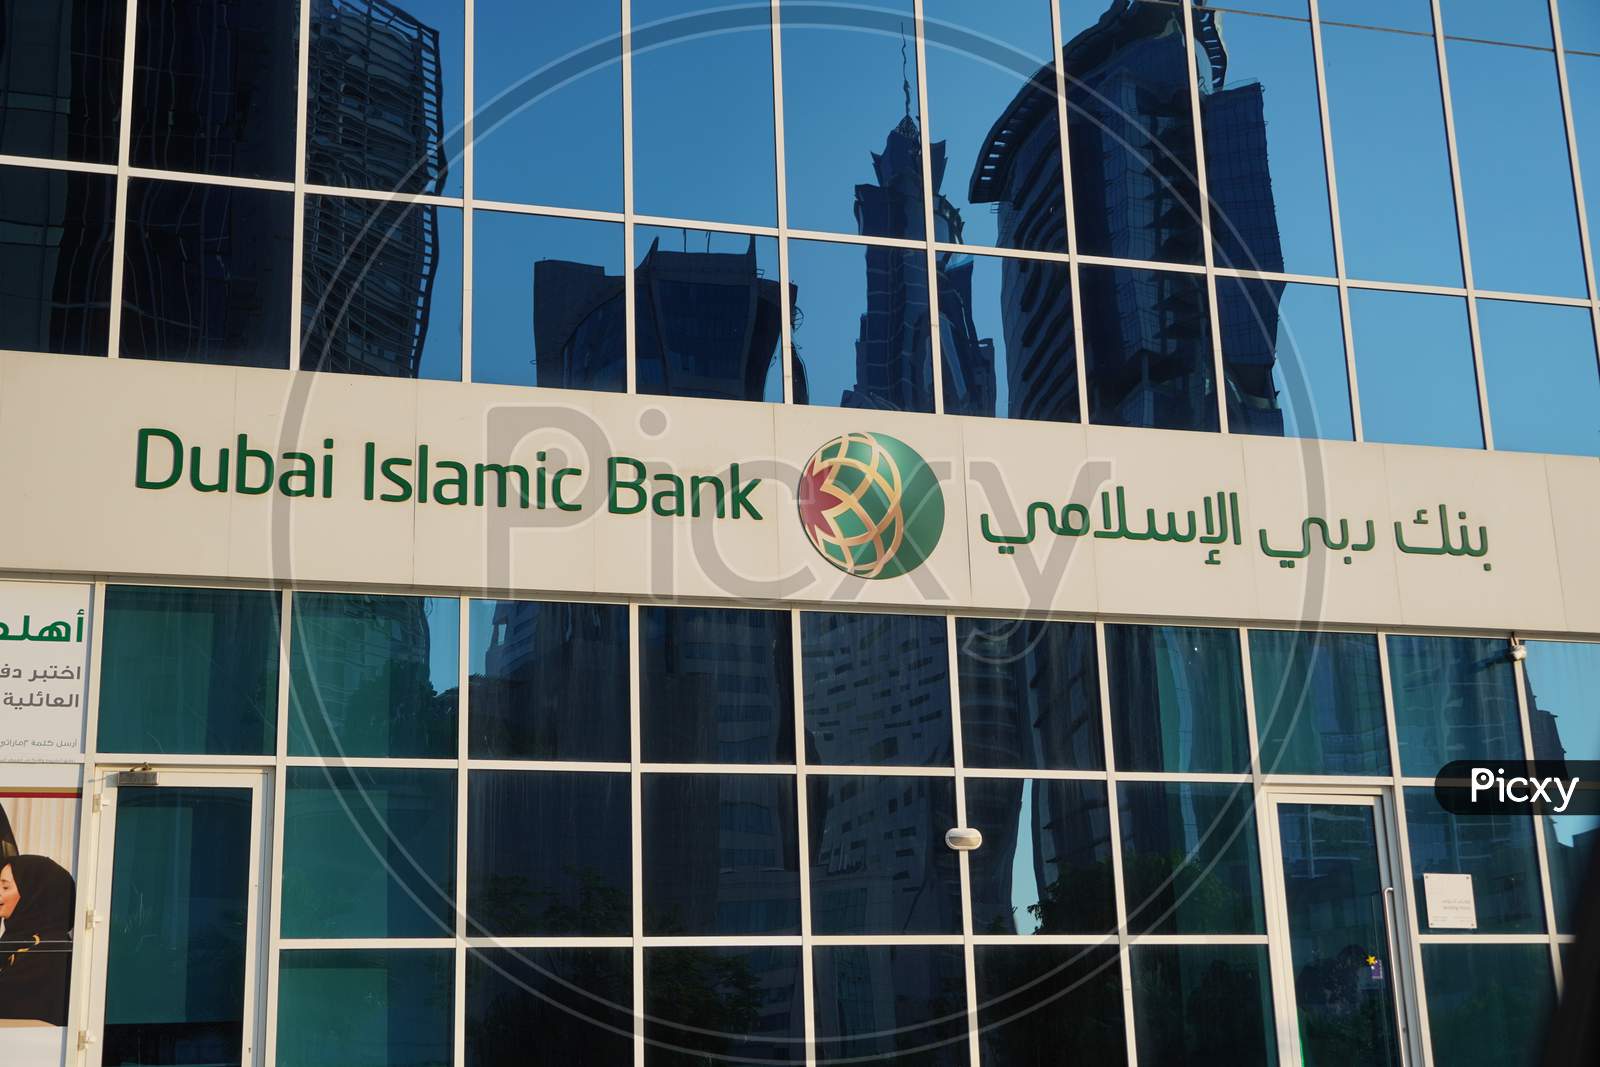 Dubai Uae December 2019 - Dubai Islamic Bank A Major Middle Eastern Banks Building Sign Logo On Large Building On A Sunny Day.